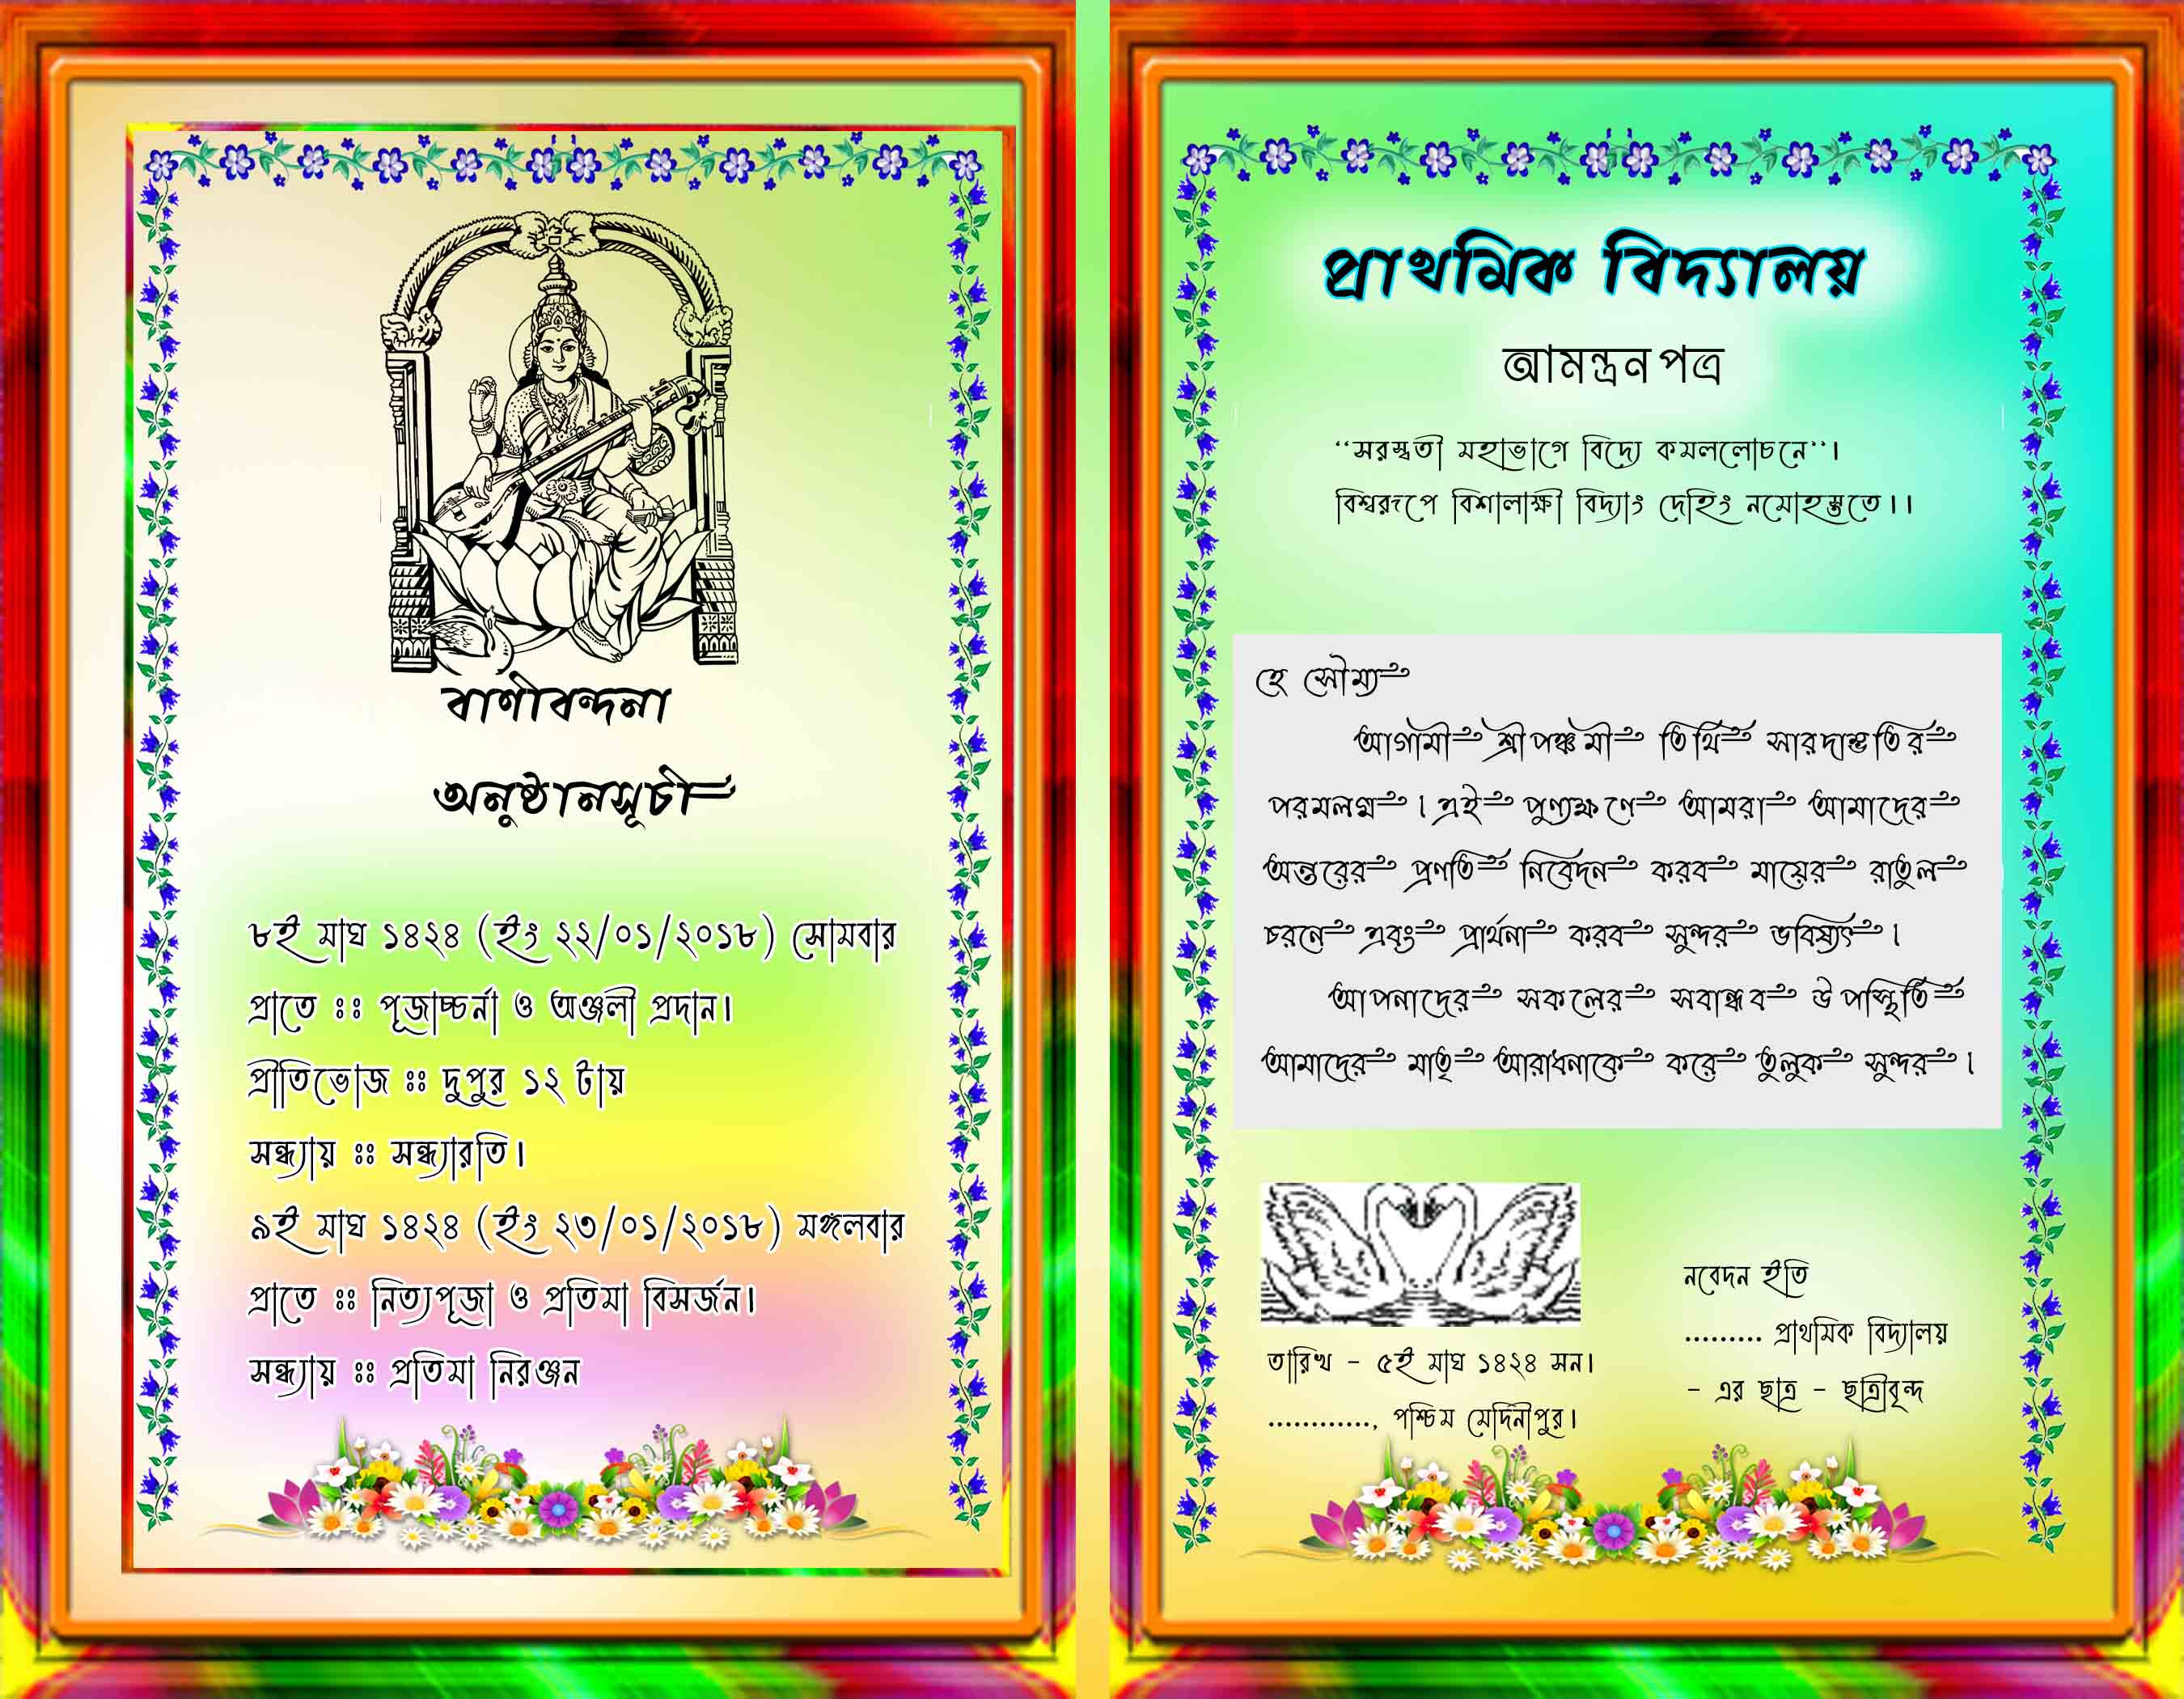 Invitation card for Saraswati puja / designing format » Picture Density